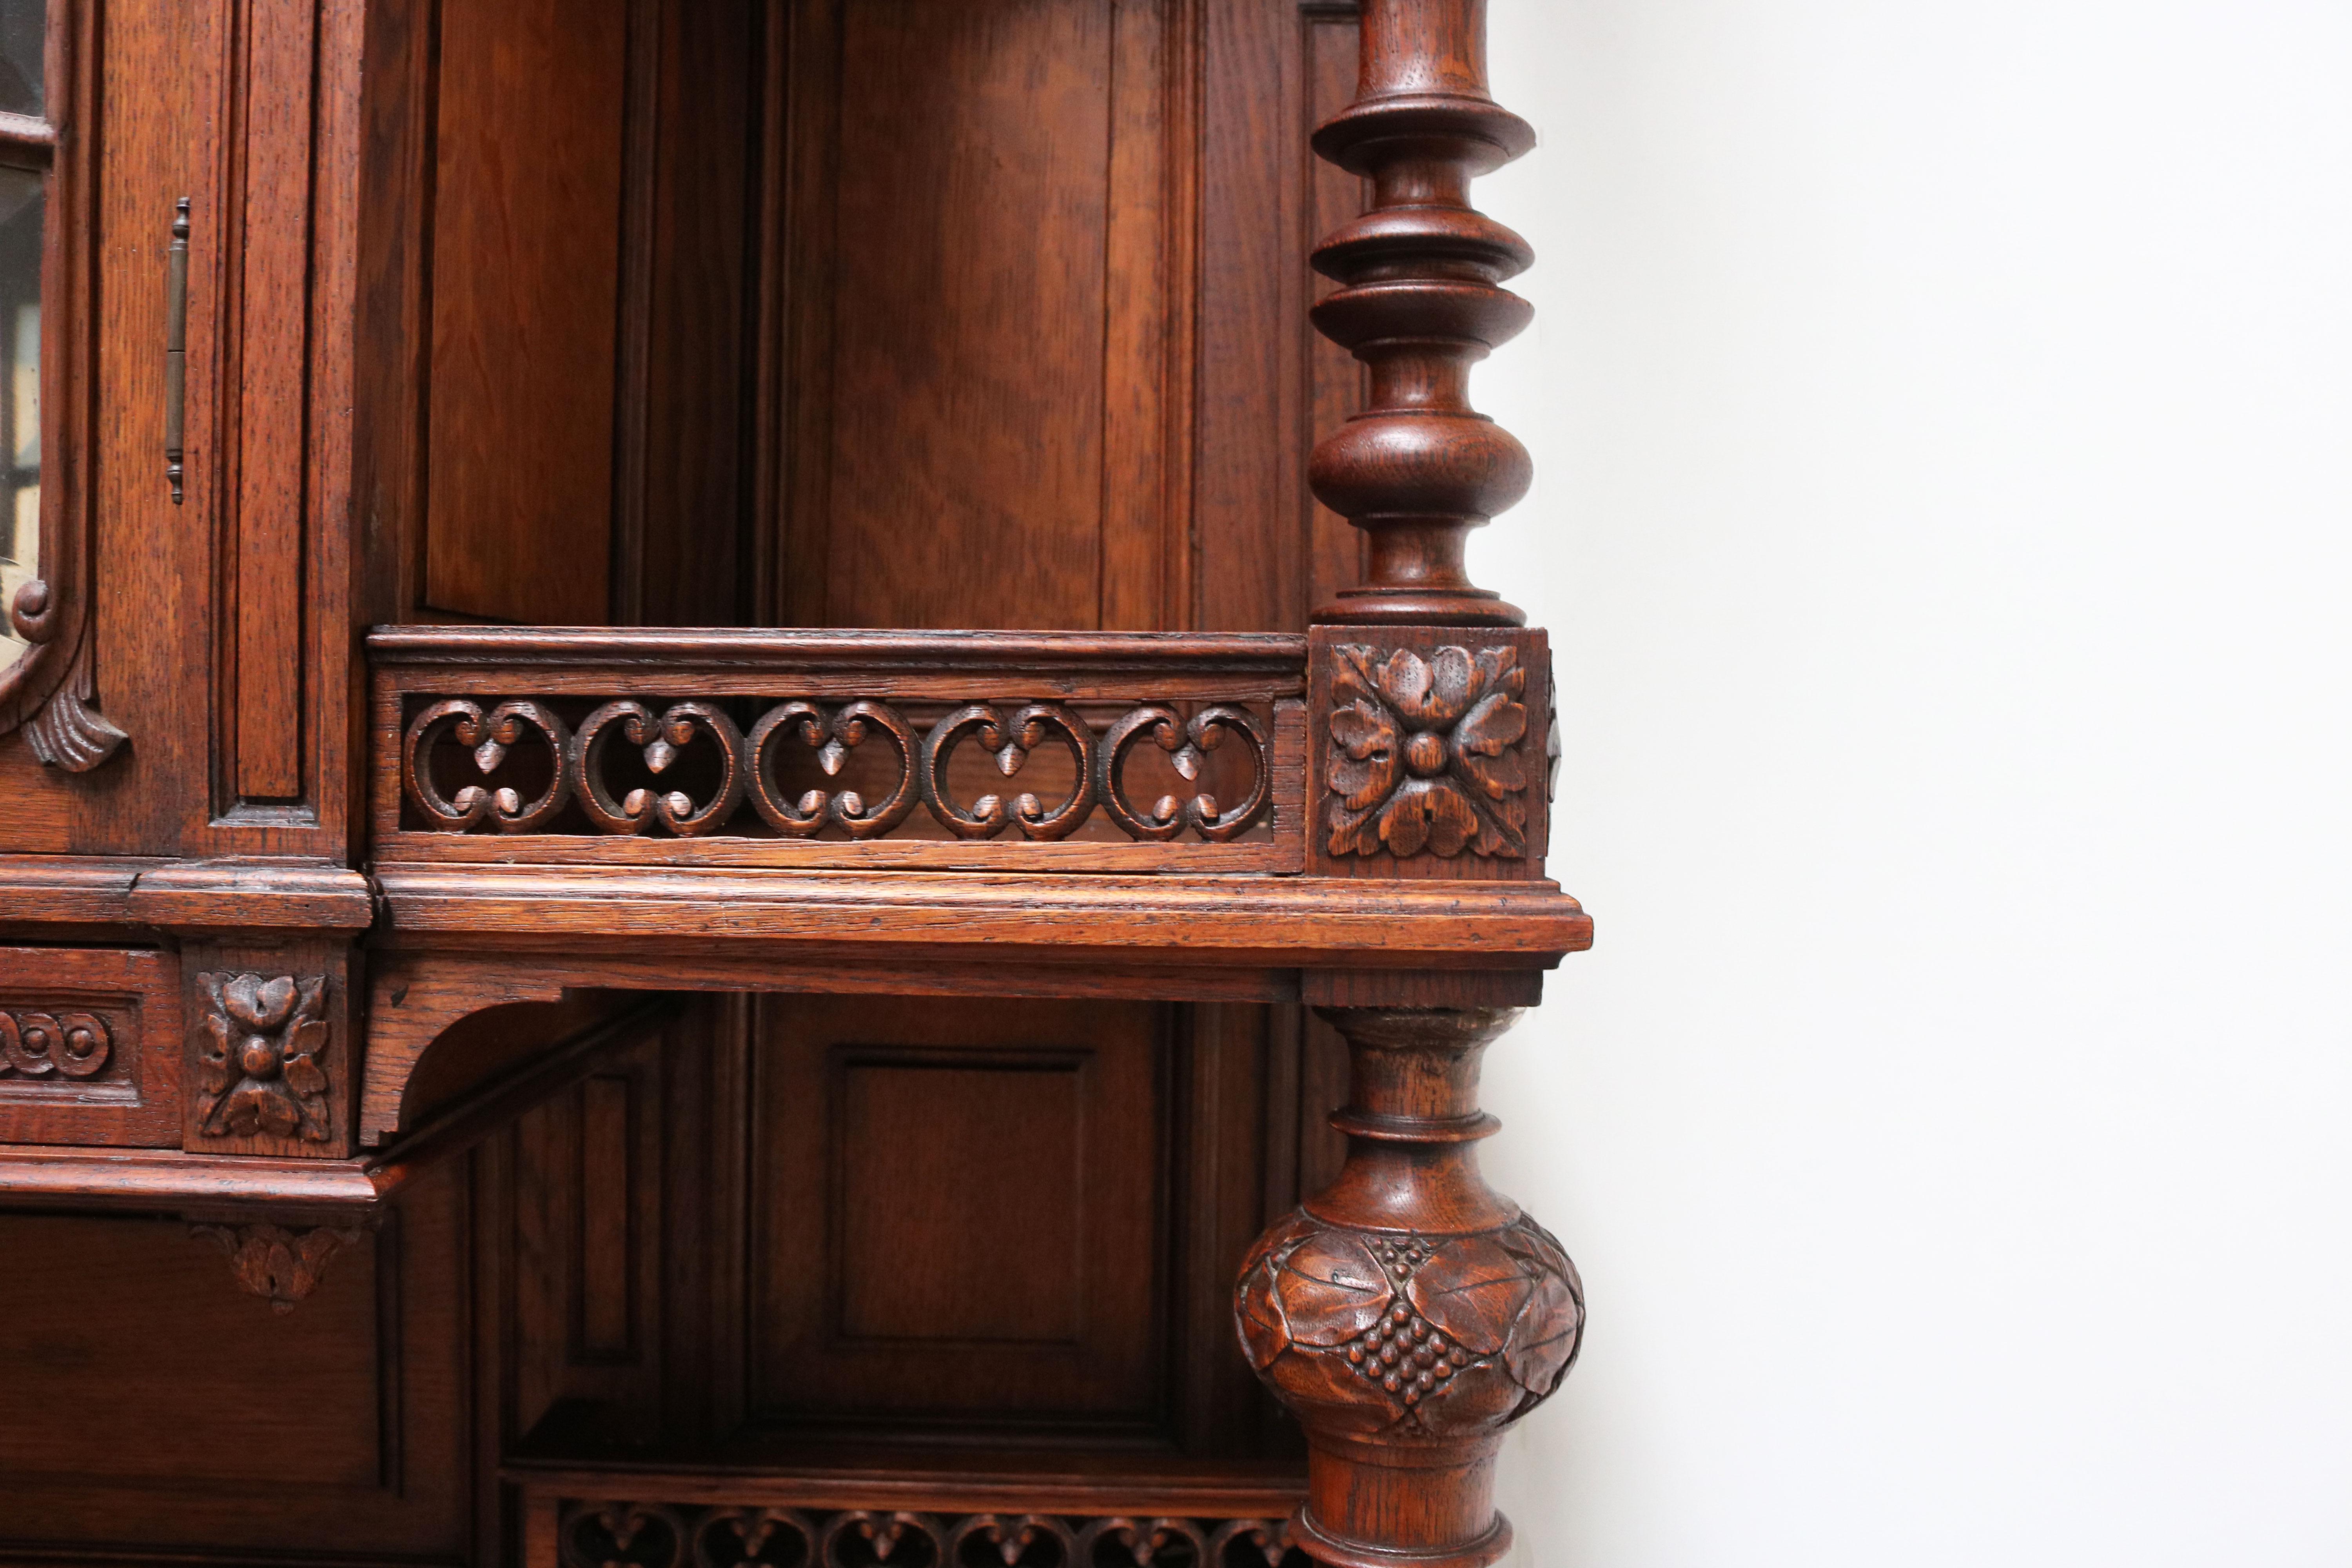 Pair of Large French Antique Renaissance Revival Buffet Cabinet Oak 19th Century For Sale 2